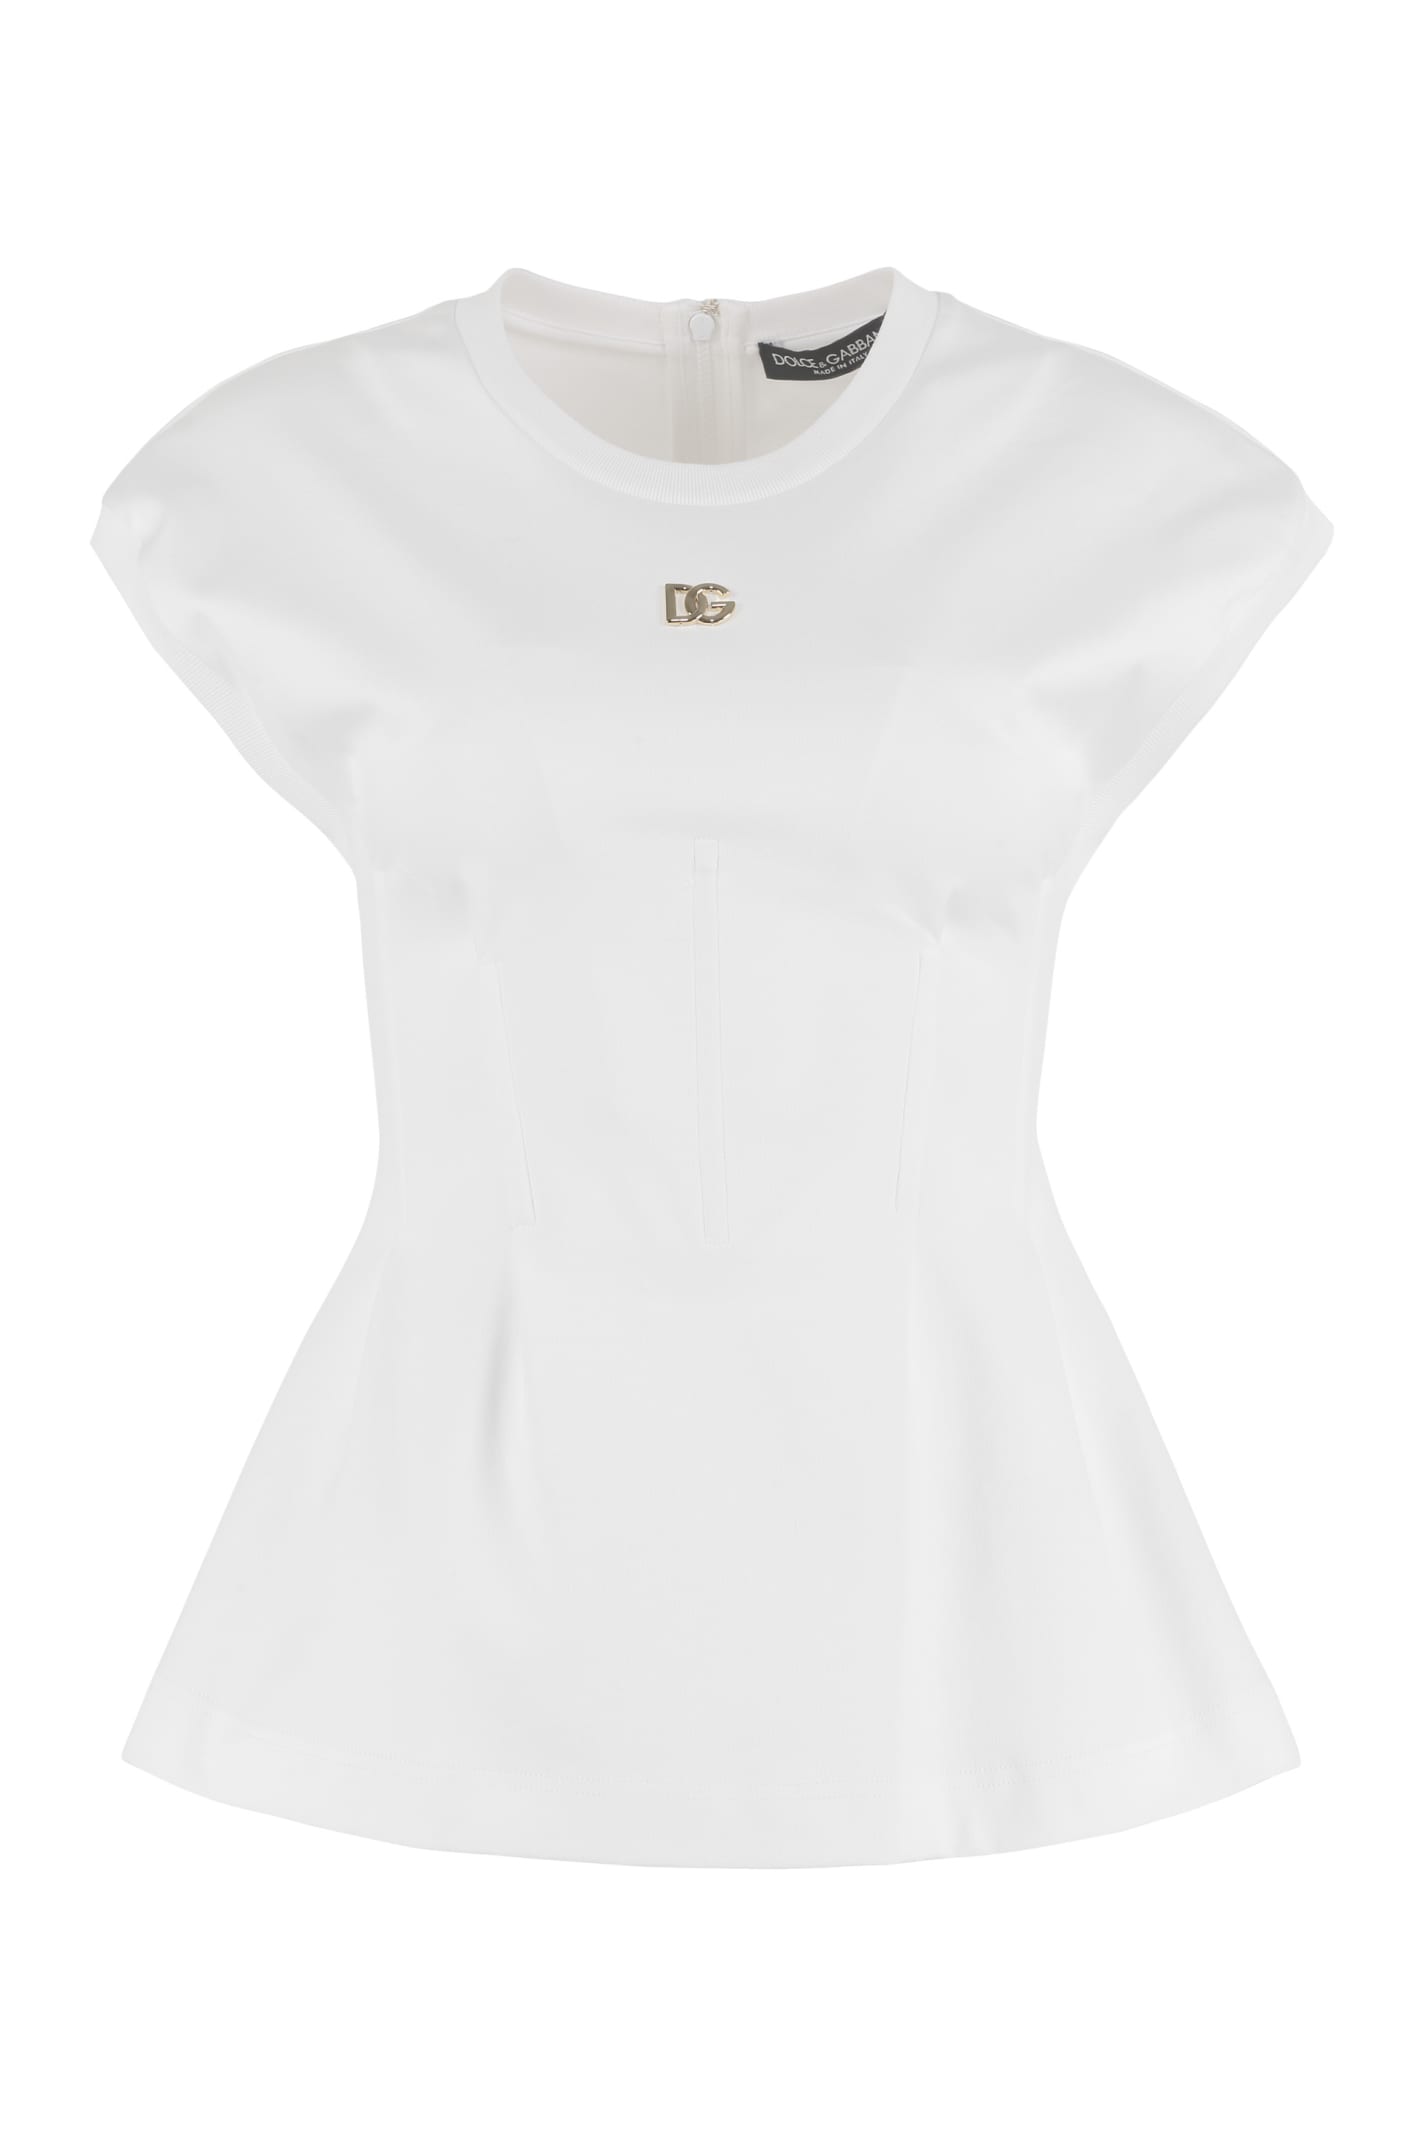 Dolce & Gabbana Cotton Top With Logo